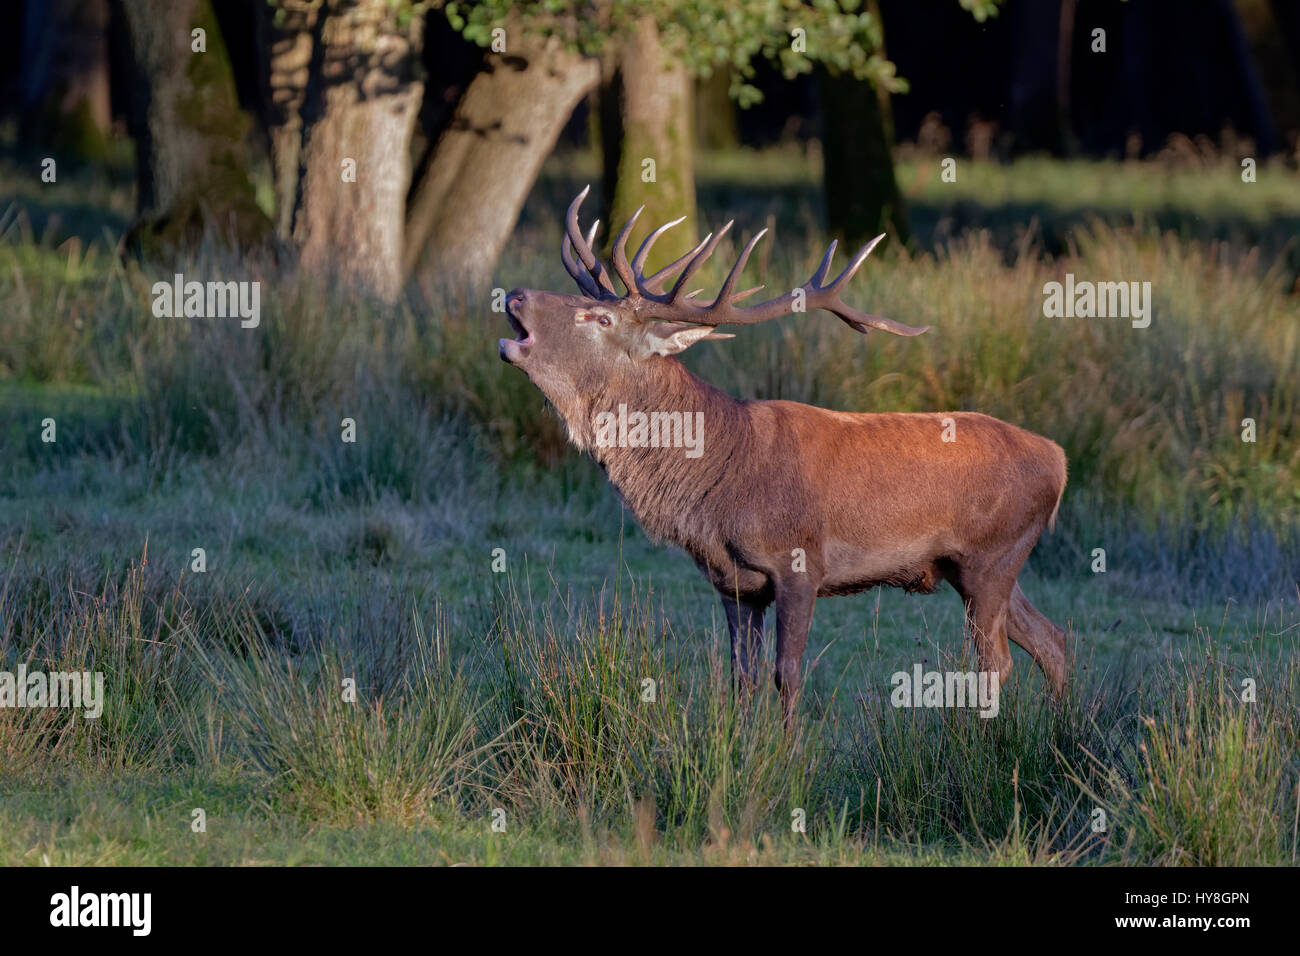 Rothirsche (Cervus elaphus), röhrend, Deutschland, Europa / Red Deer (Cervus elaphus), belling, Germany, Europe Stock Photo